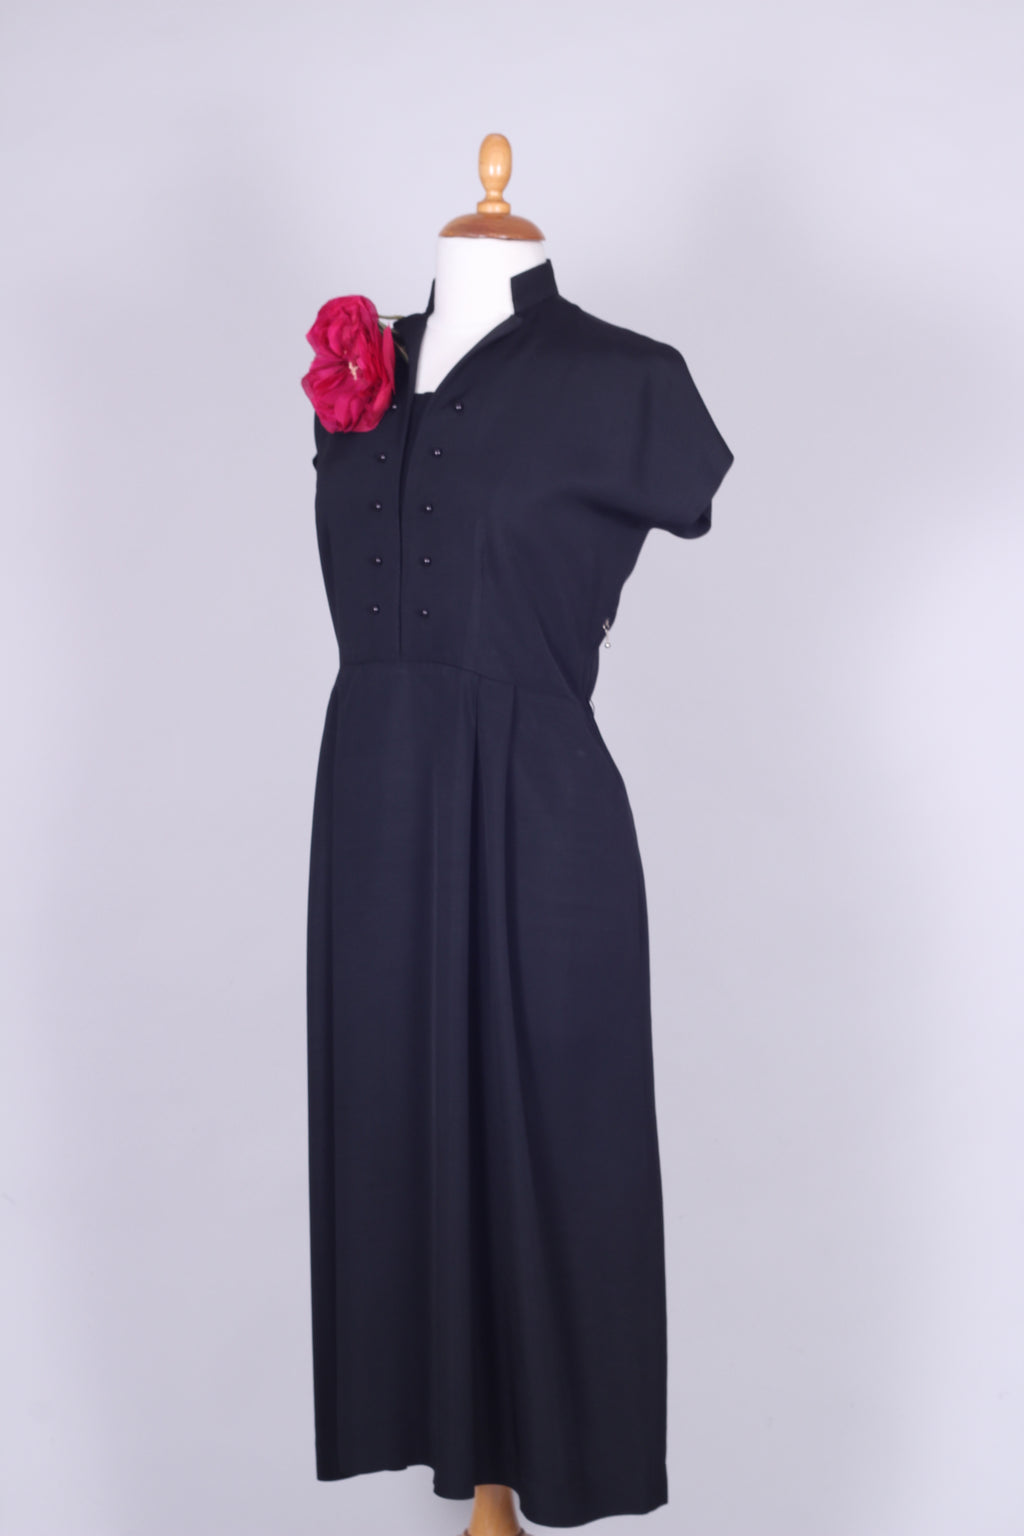 Sort kjole i silke rebs. 1950. Xl